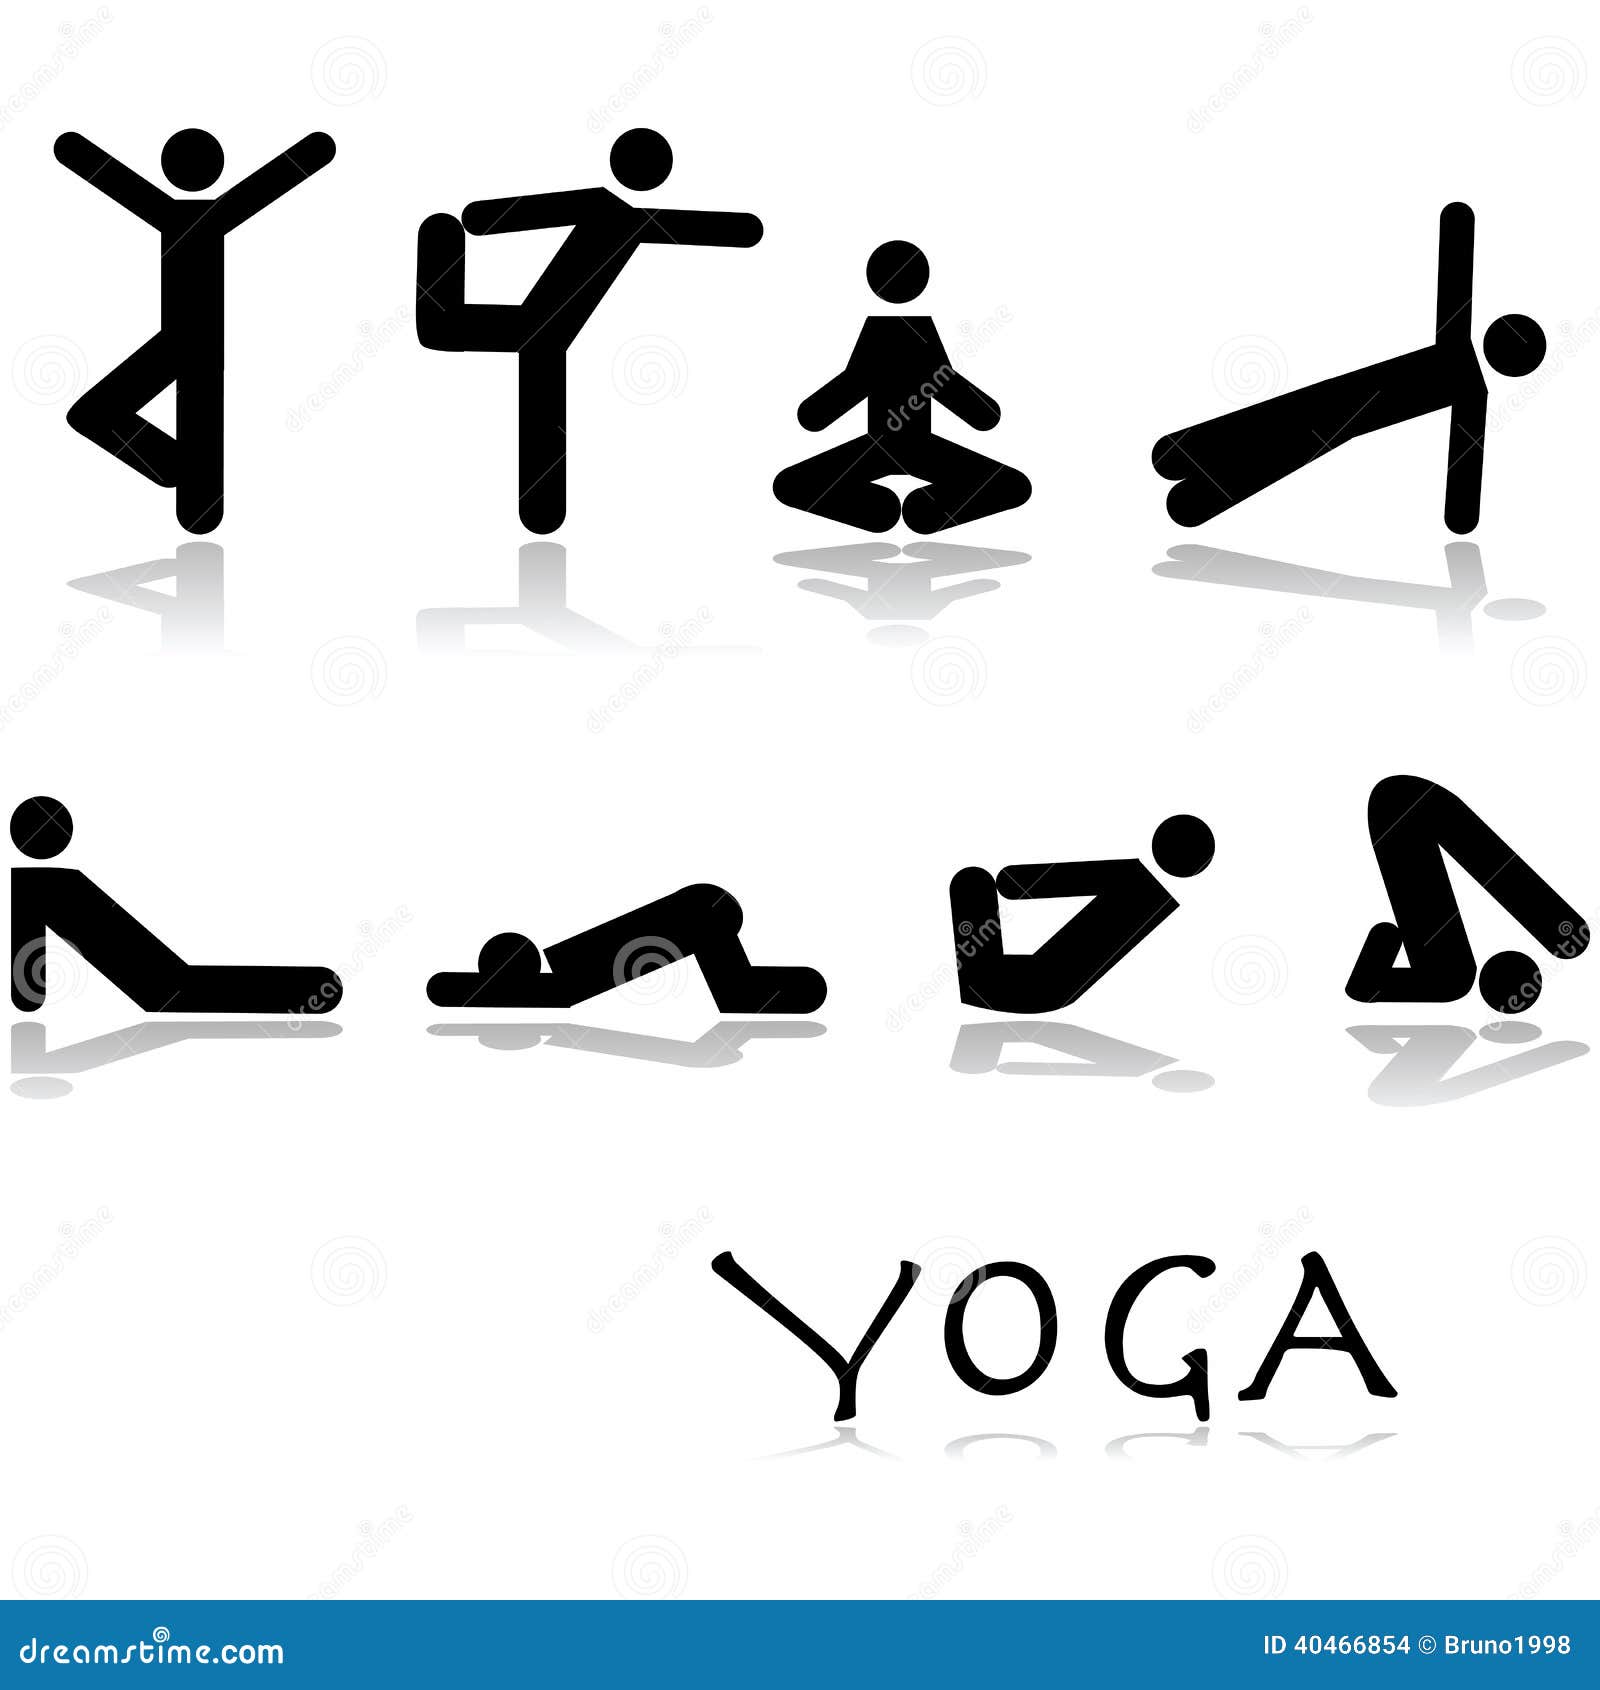 Yoga Poses Stock Vector - Image: 40466854